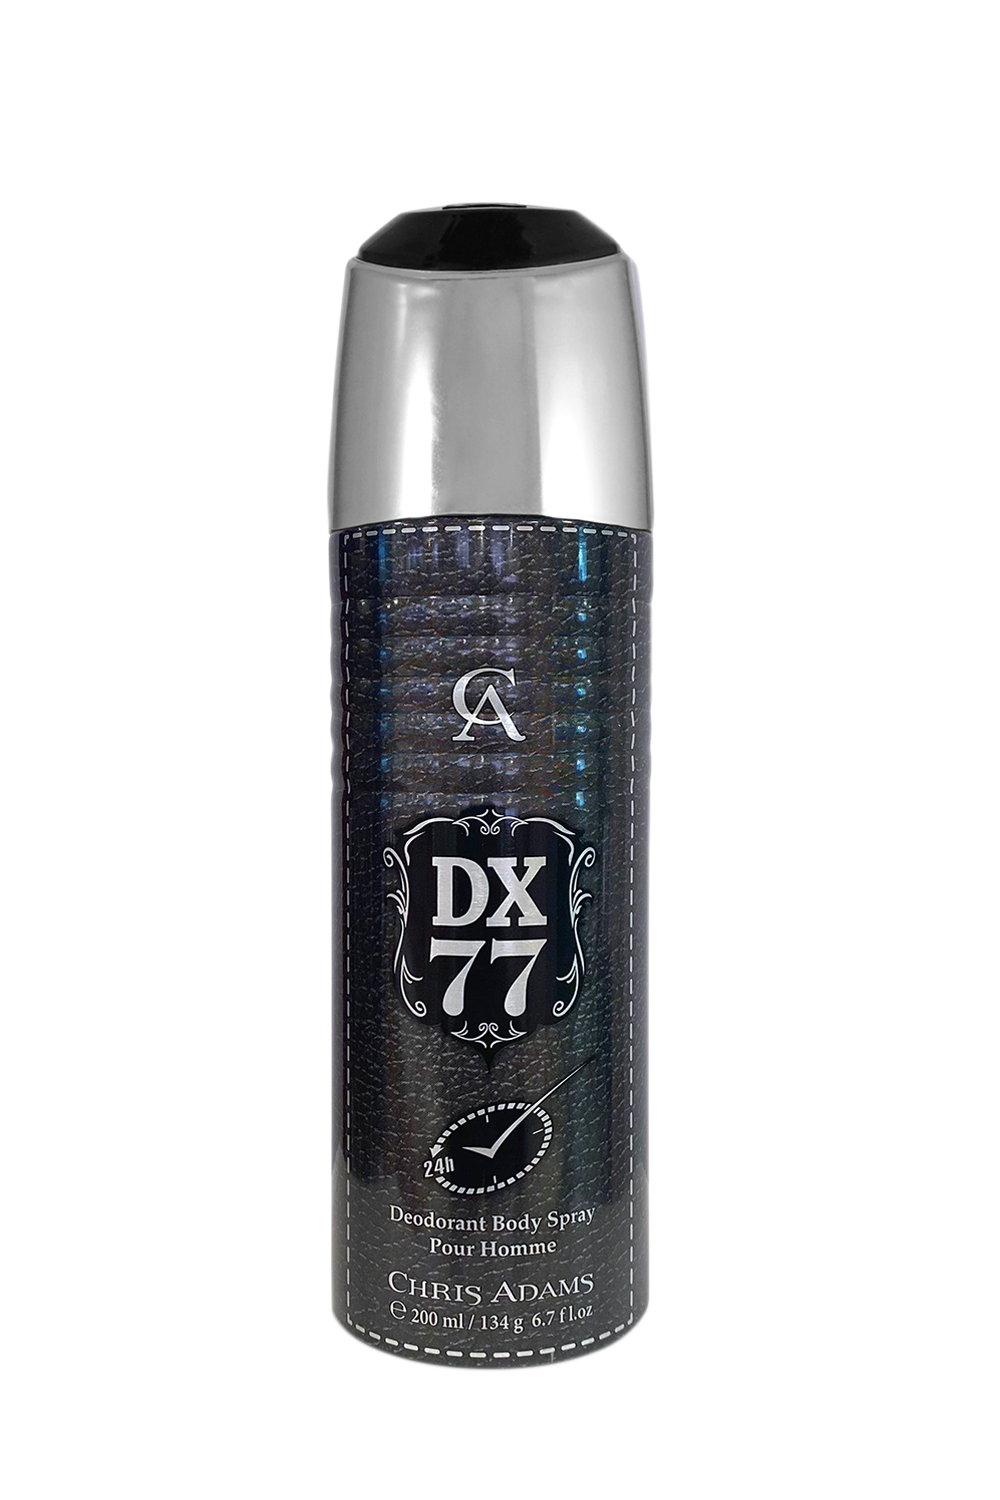 DX 77 (M) 200ml Deodorants body spray for men online